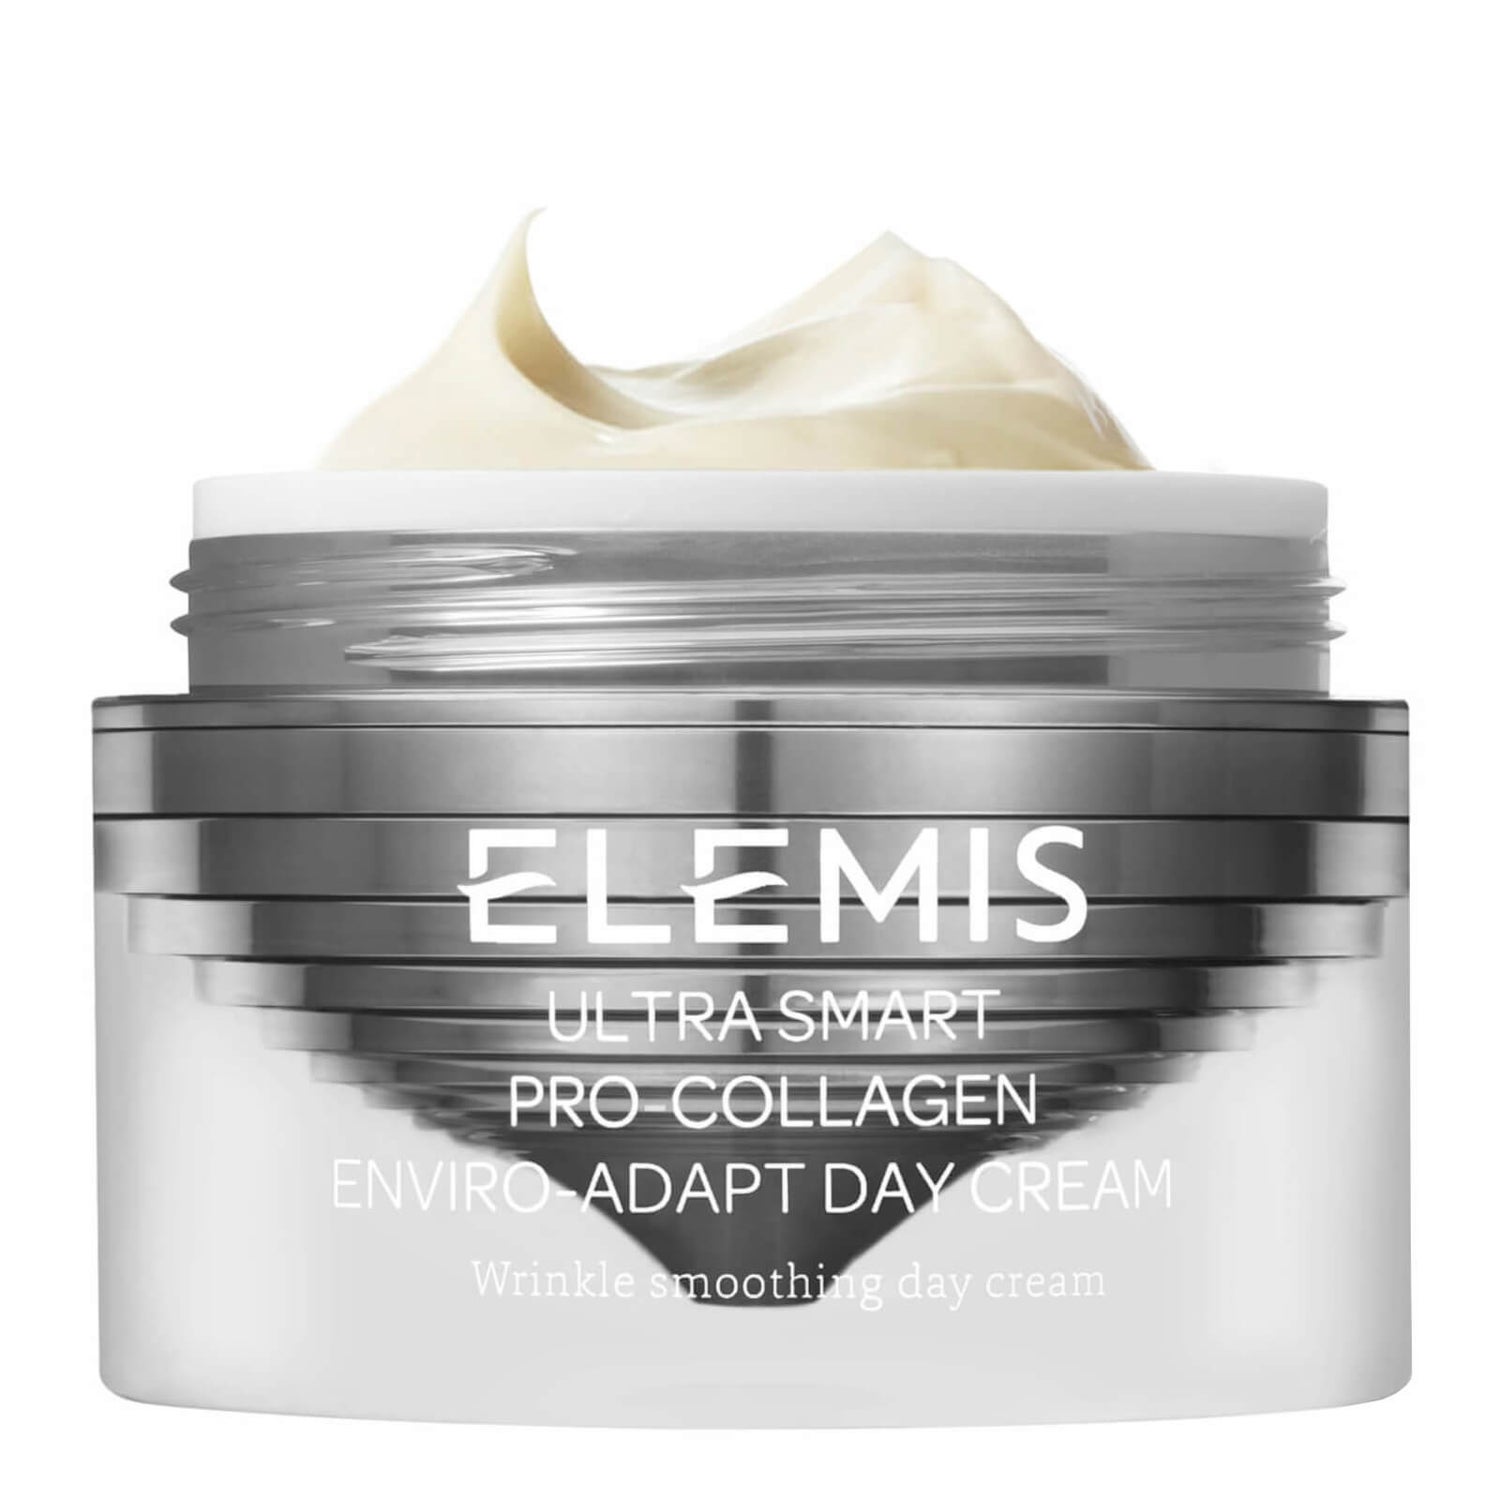 ELEMIS ULTRA SMART Pro-Collagen Enviro-Adapt Day Cream (1.7 fl. oz.)